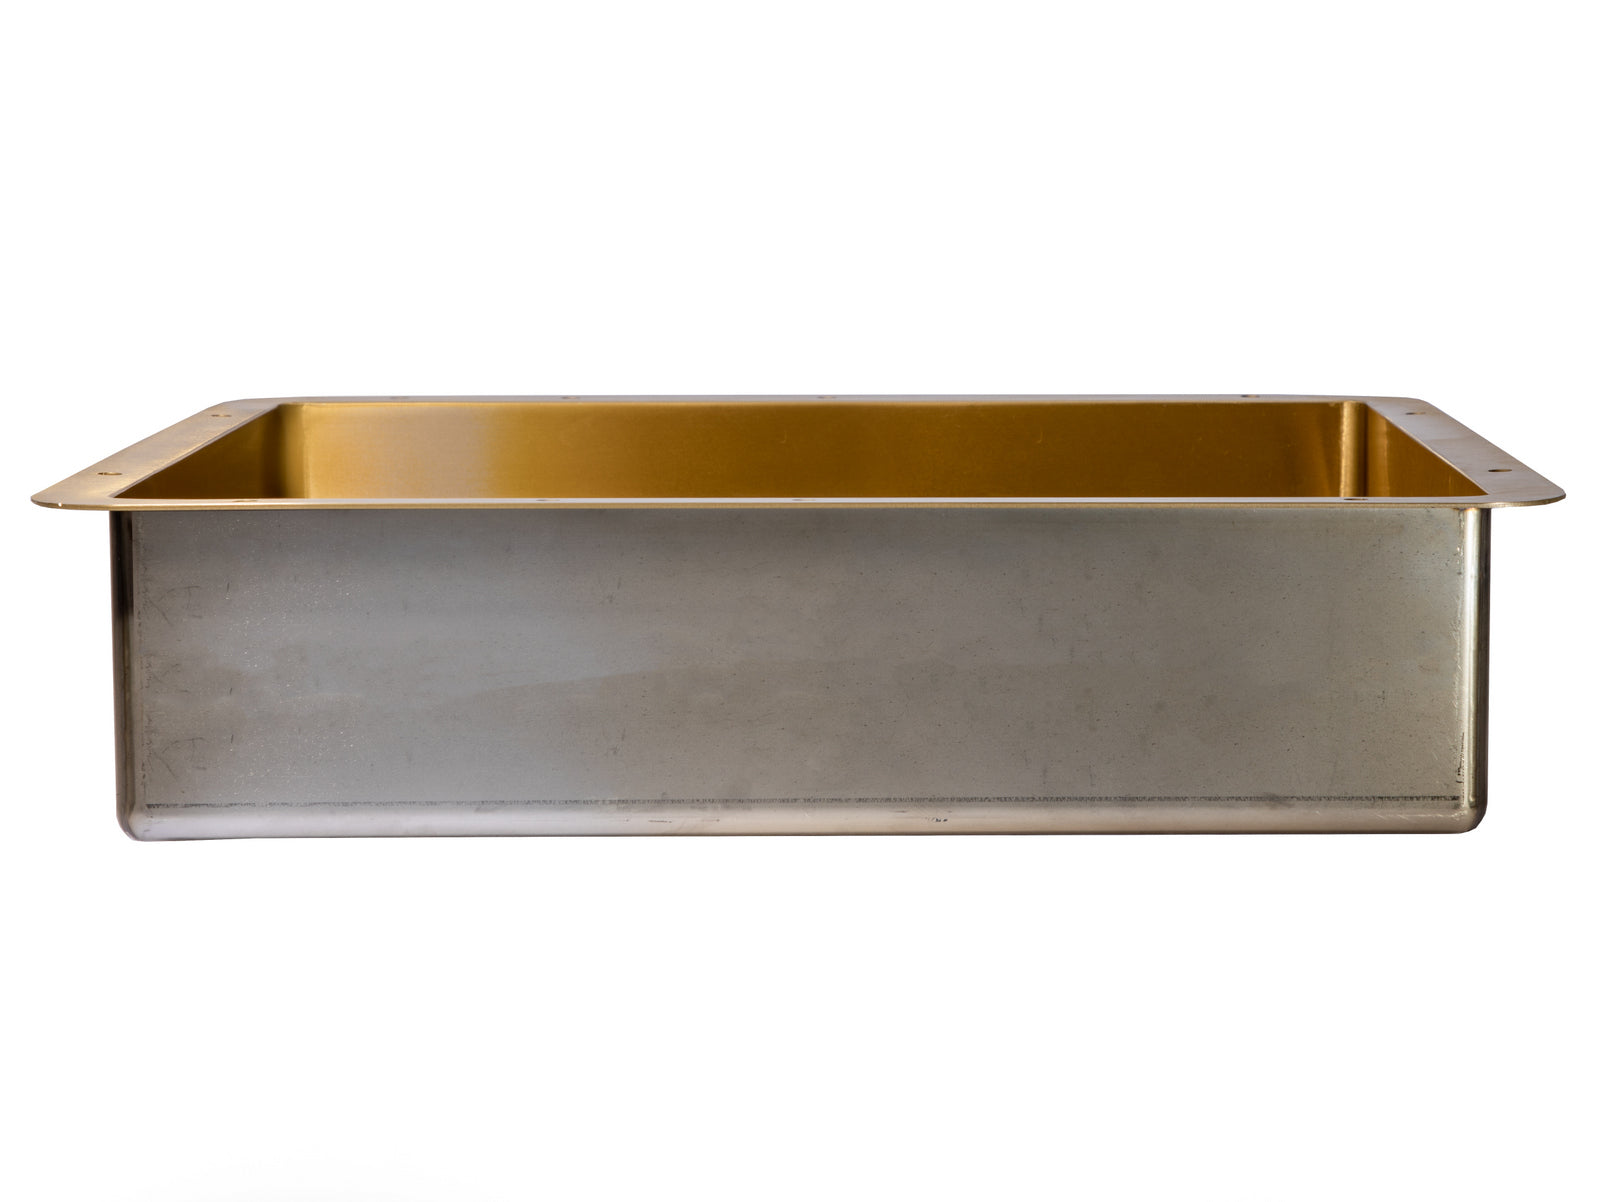 Rectangular 20" x 16" Stainless Steel Undermount Bathroom Sink with Drain in Gold